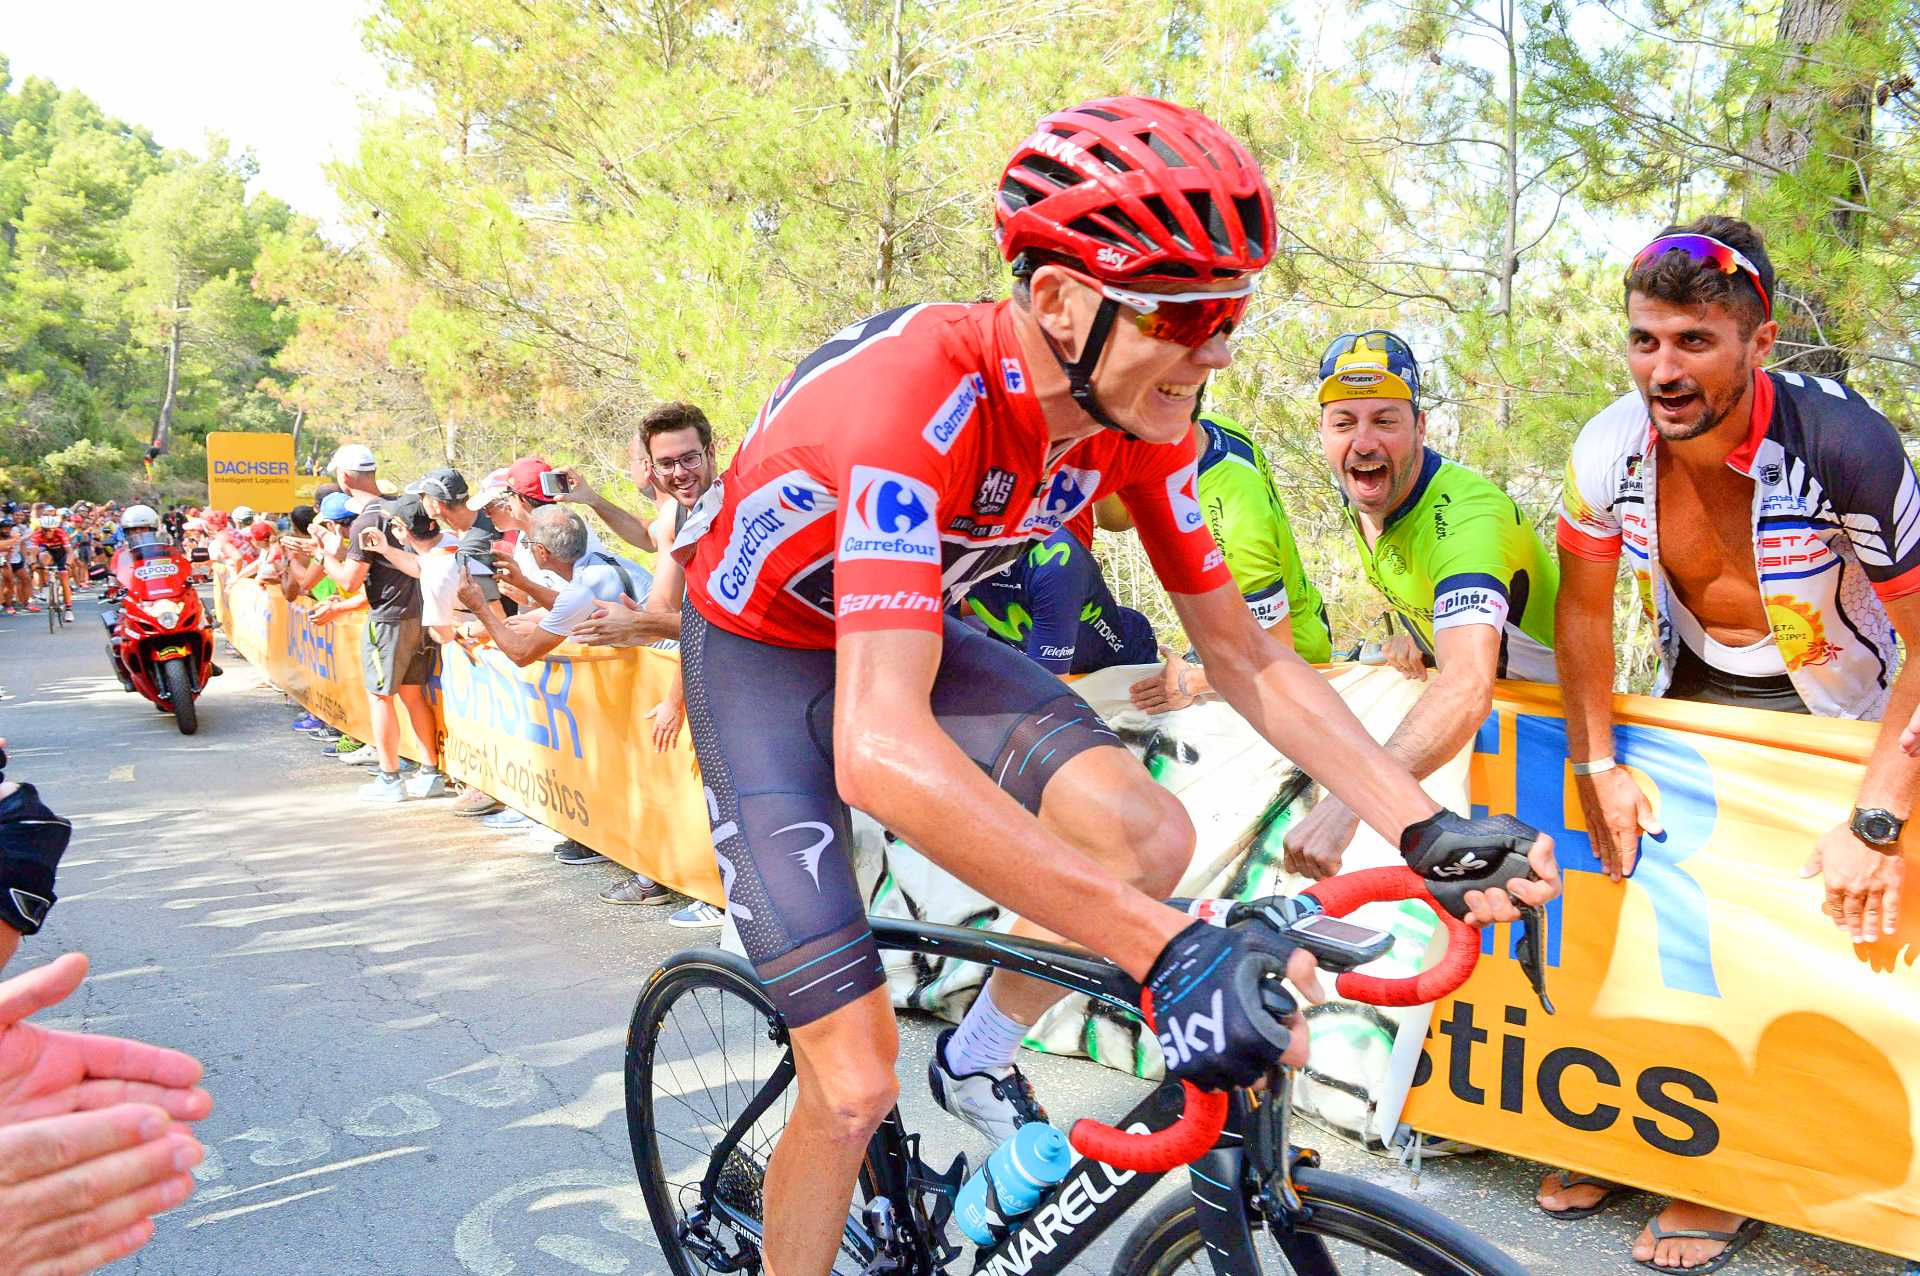 Chris-Froome-Vuelta-a-Espana-2017-Team-Sky-red-jersey-climb-threshold-pic-Sirotti.jpg